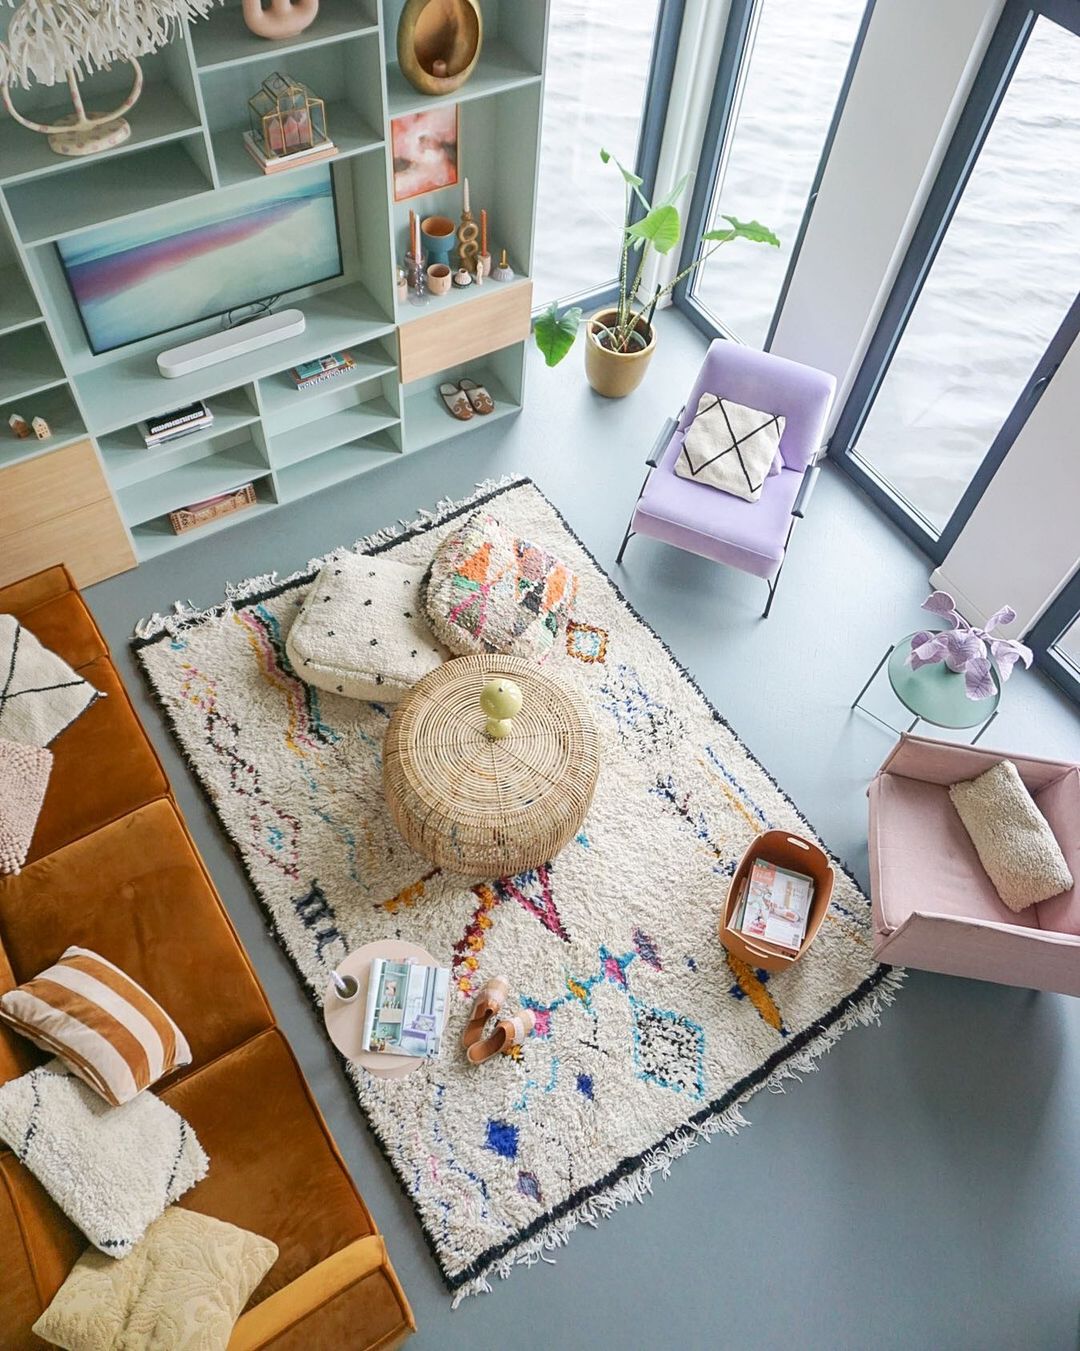 Danish Pastel Aesthetic Home Decor Trend: Get the Look